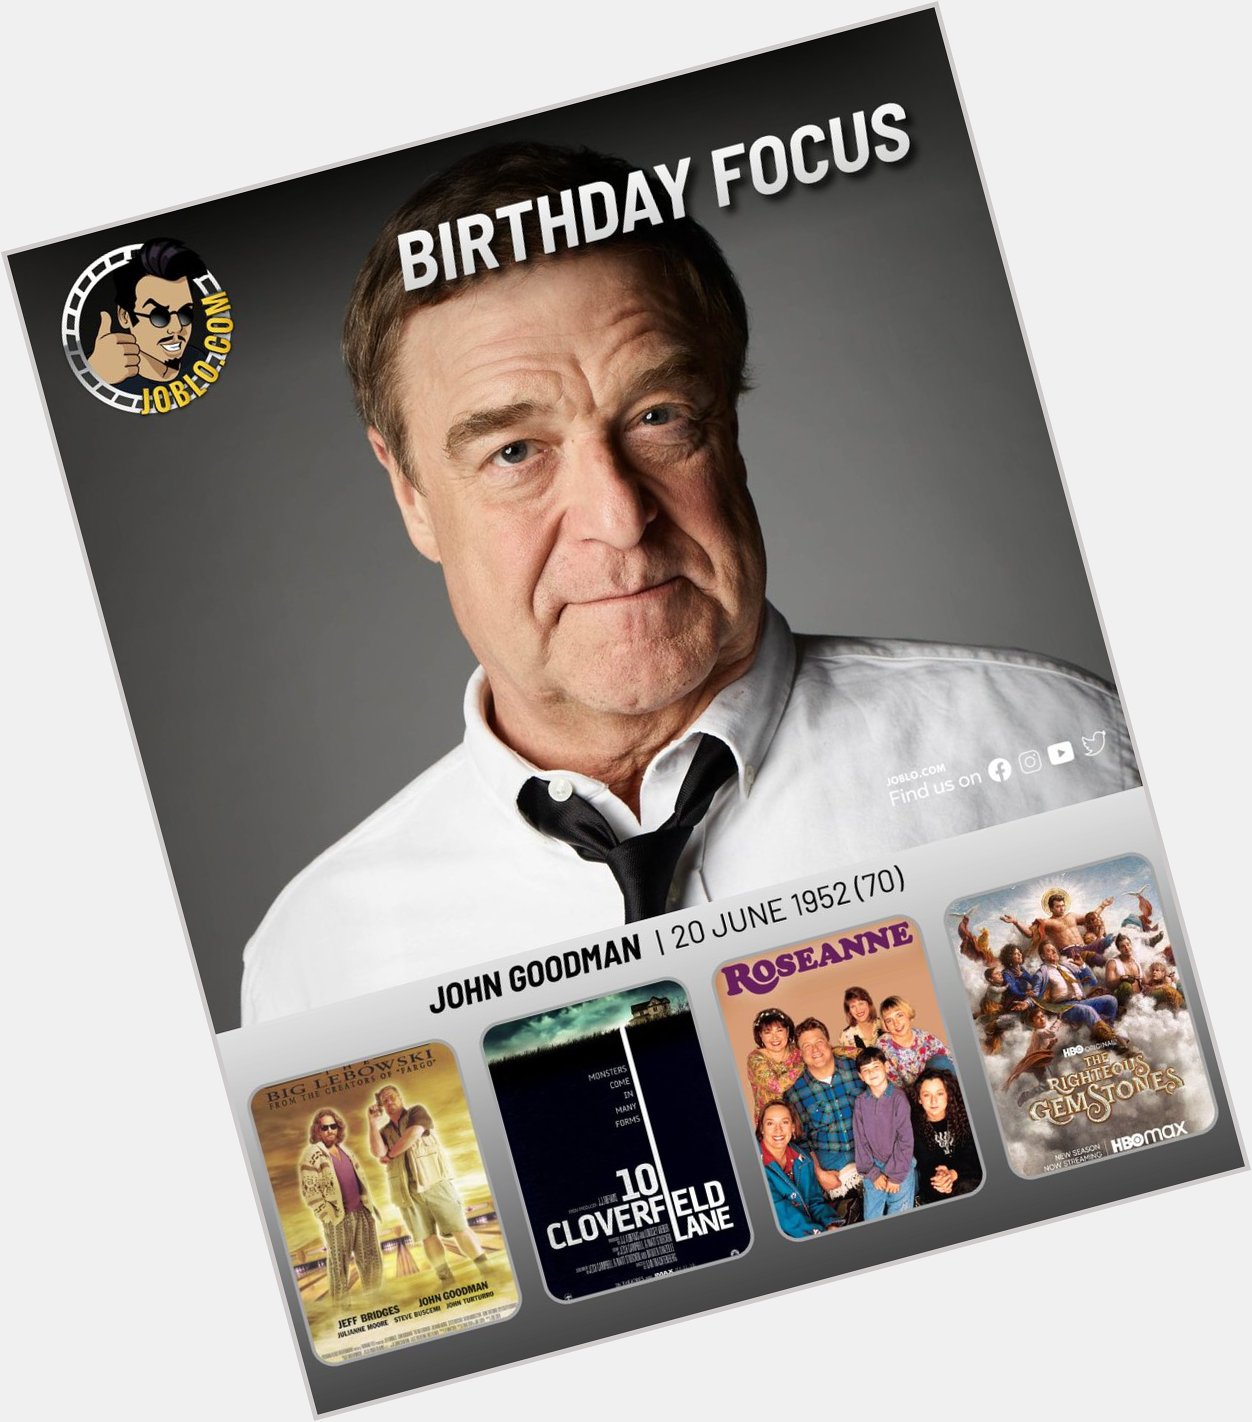 Wishing a very happy birthday to John Goodman!     